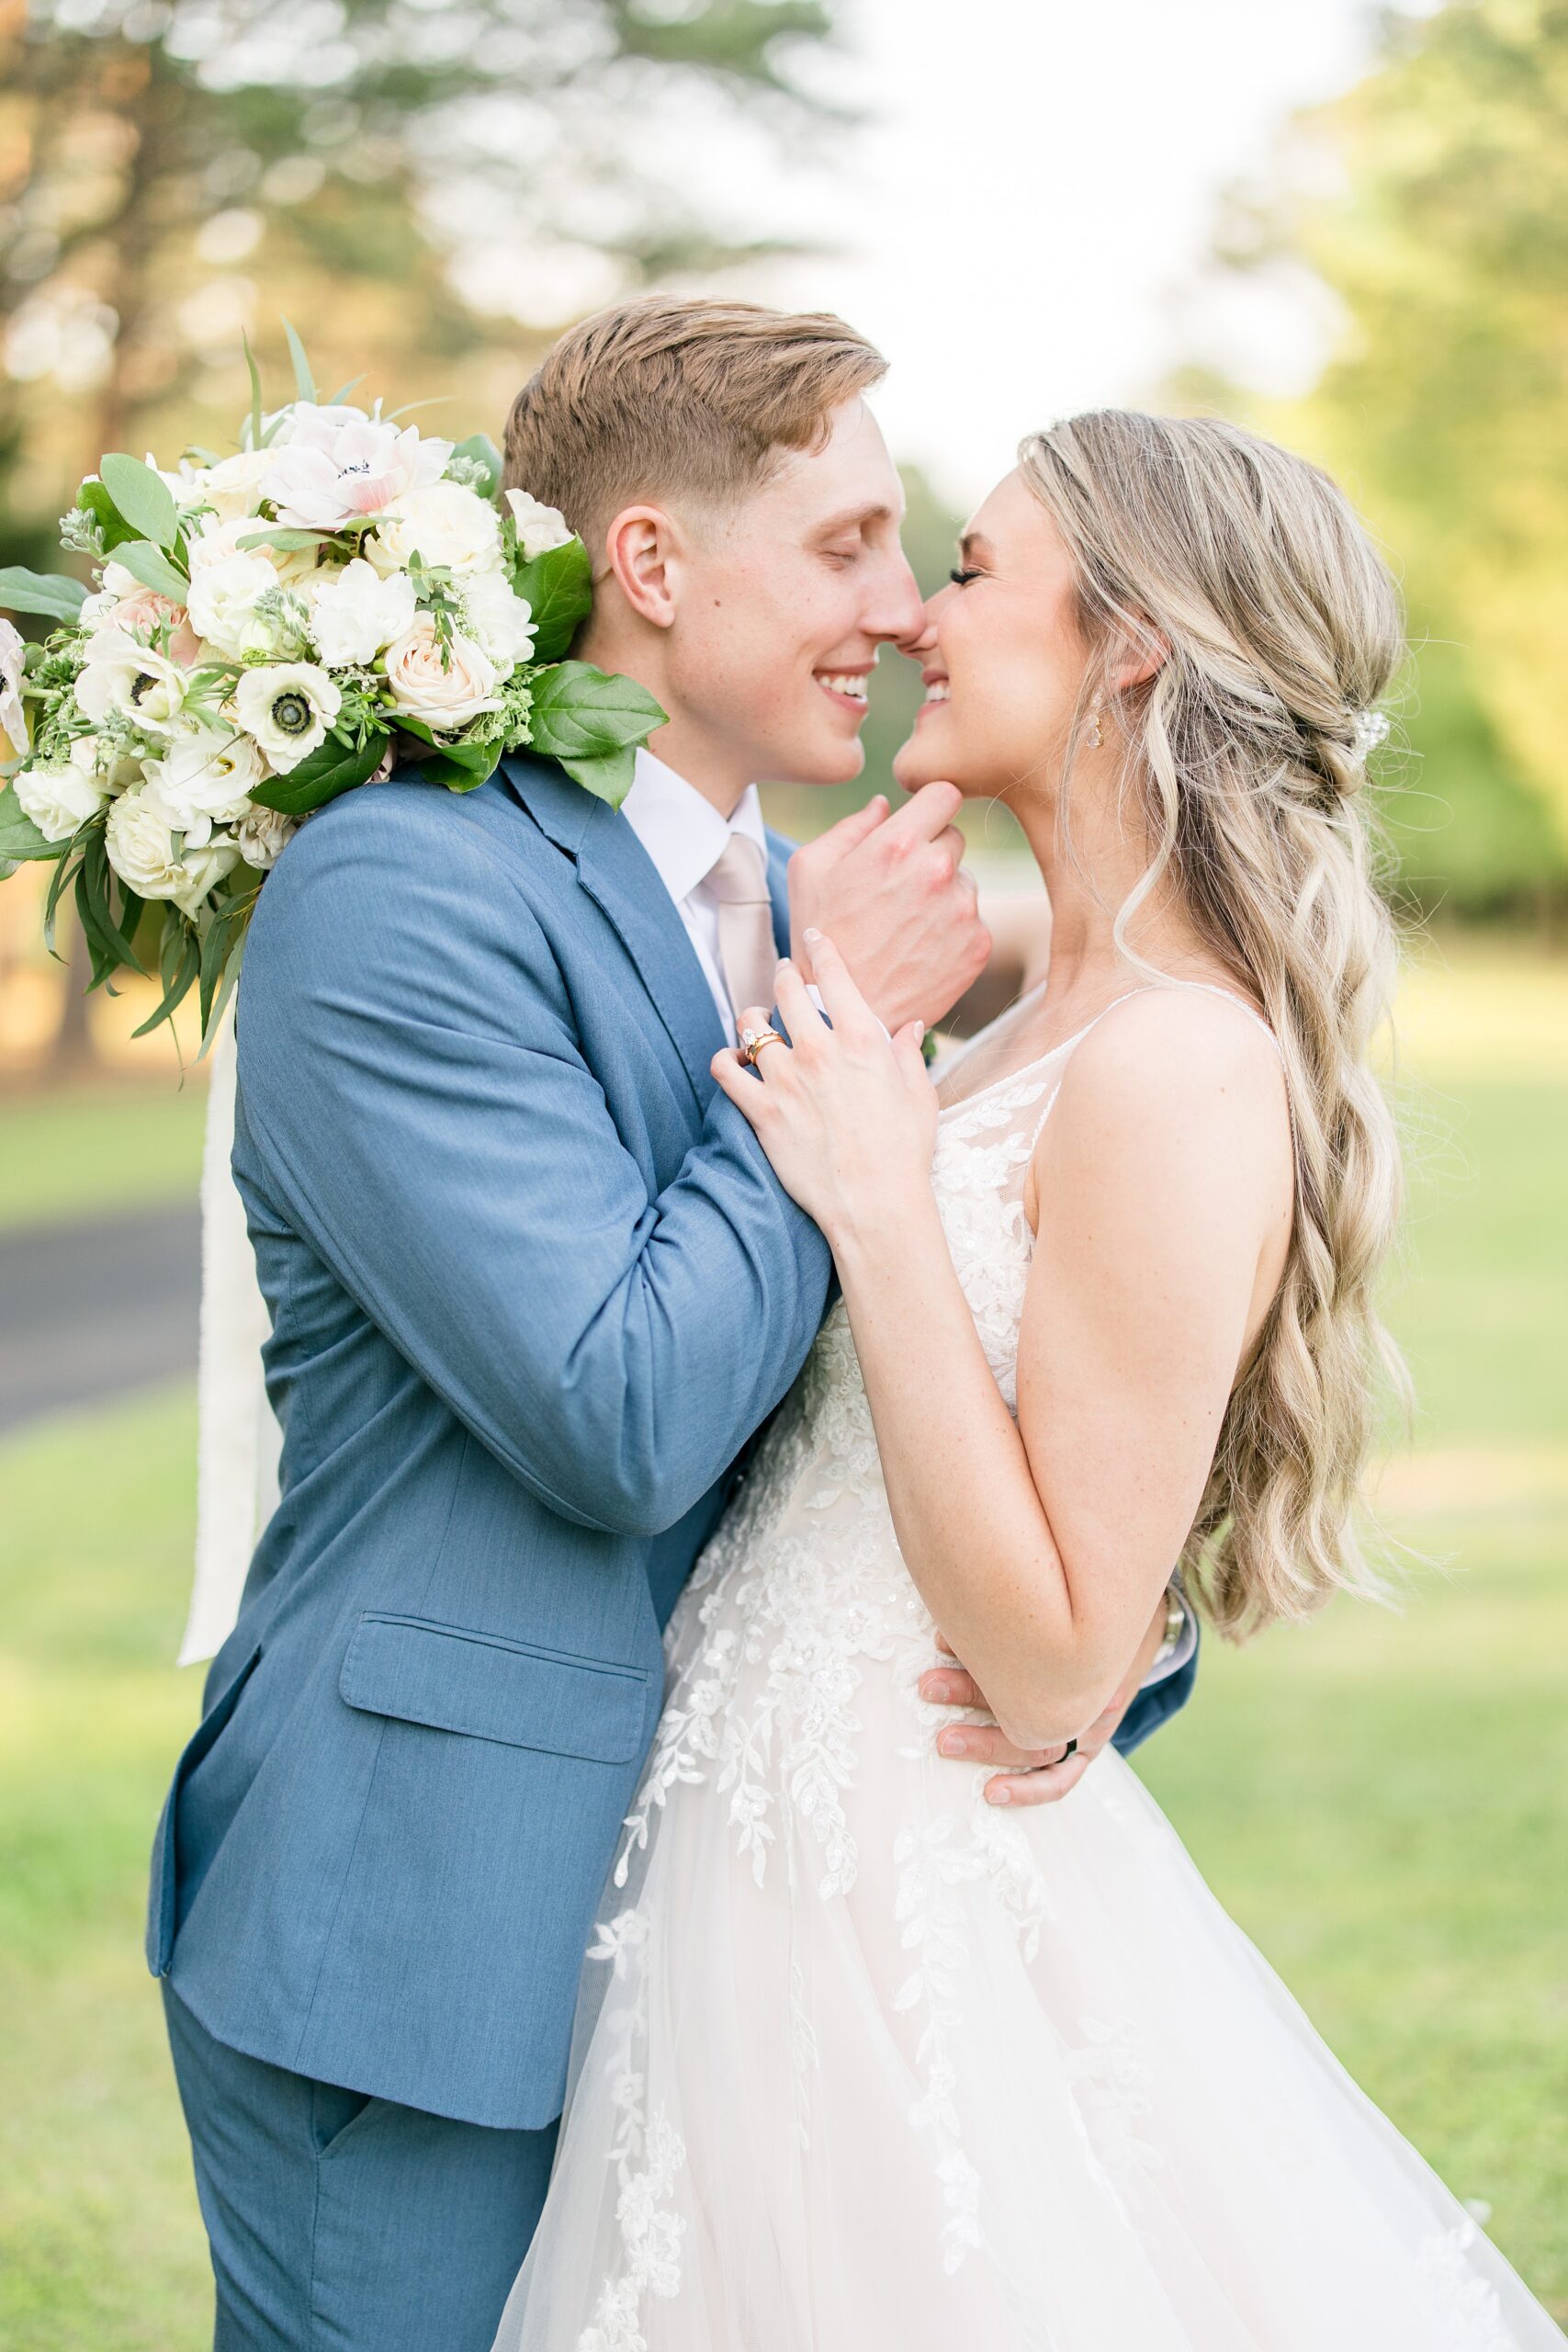 Sonnet House Spring Wedding for Samantha + Conner - Katie & Alec Photography Birmingham, Alabama Wedding Photographers